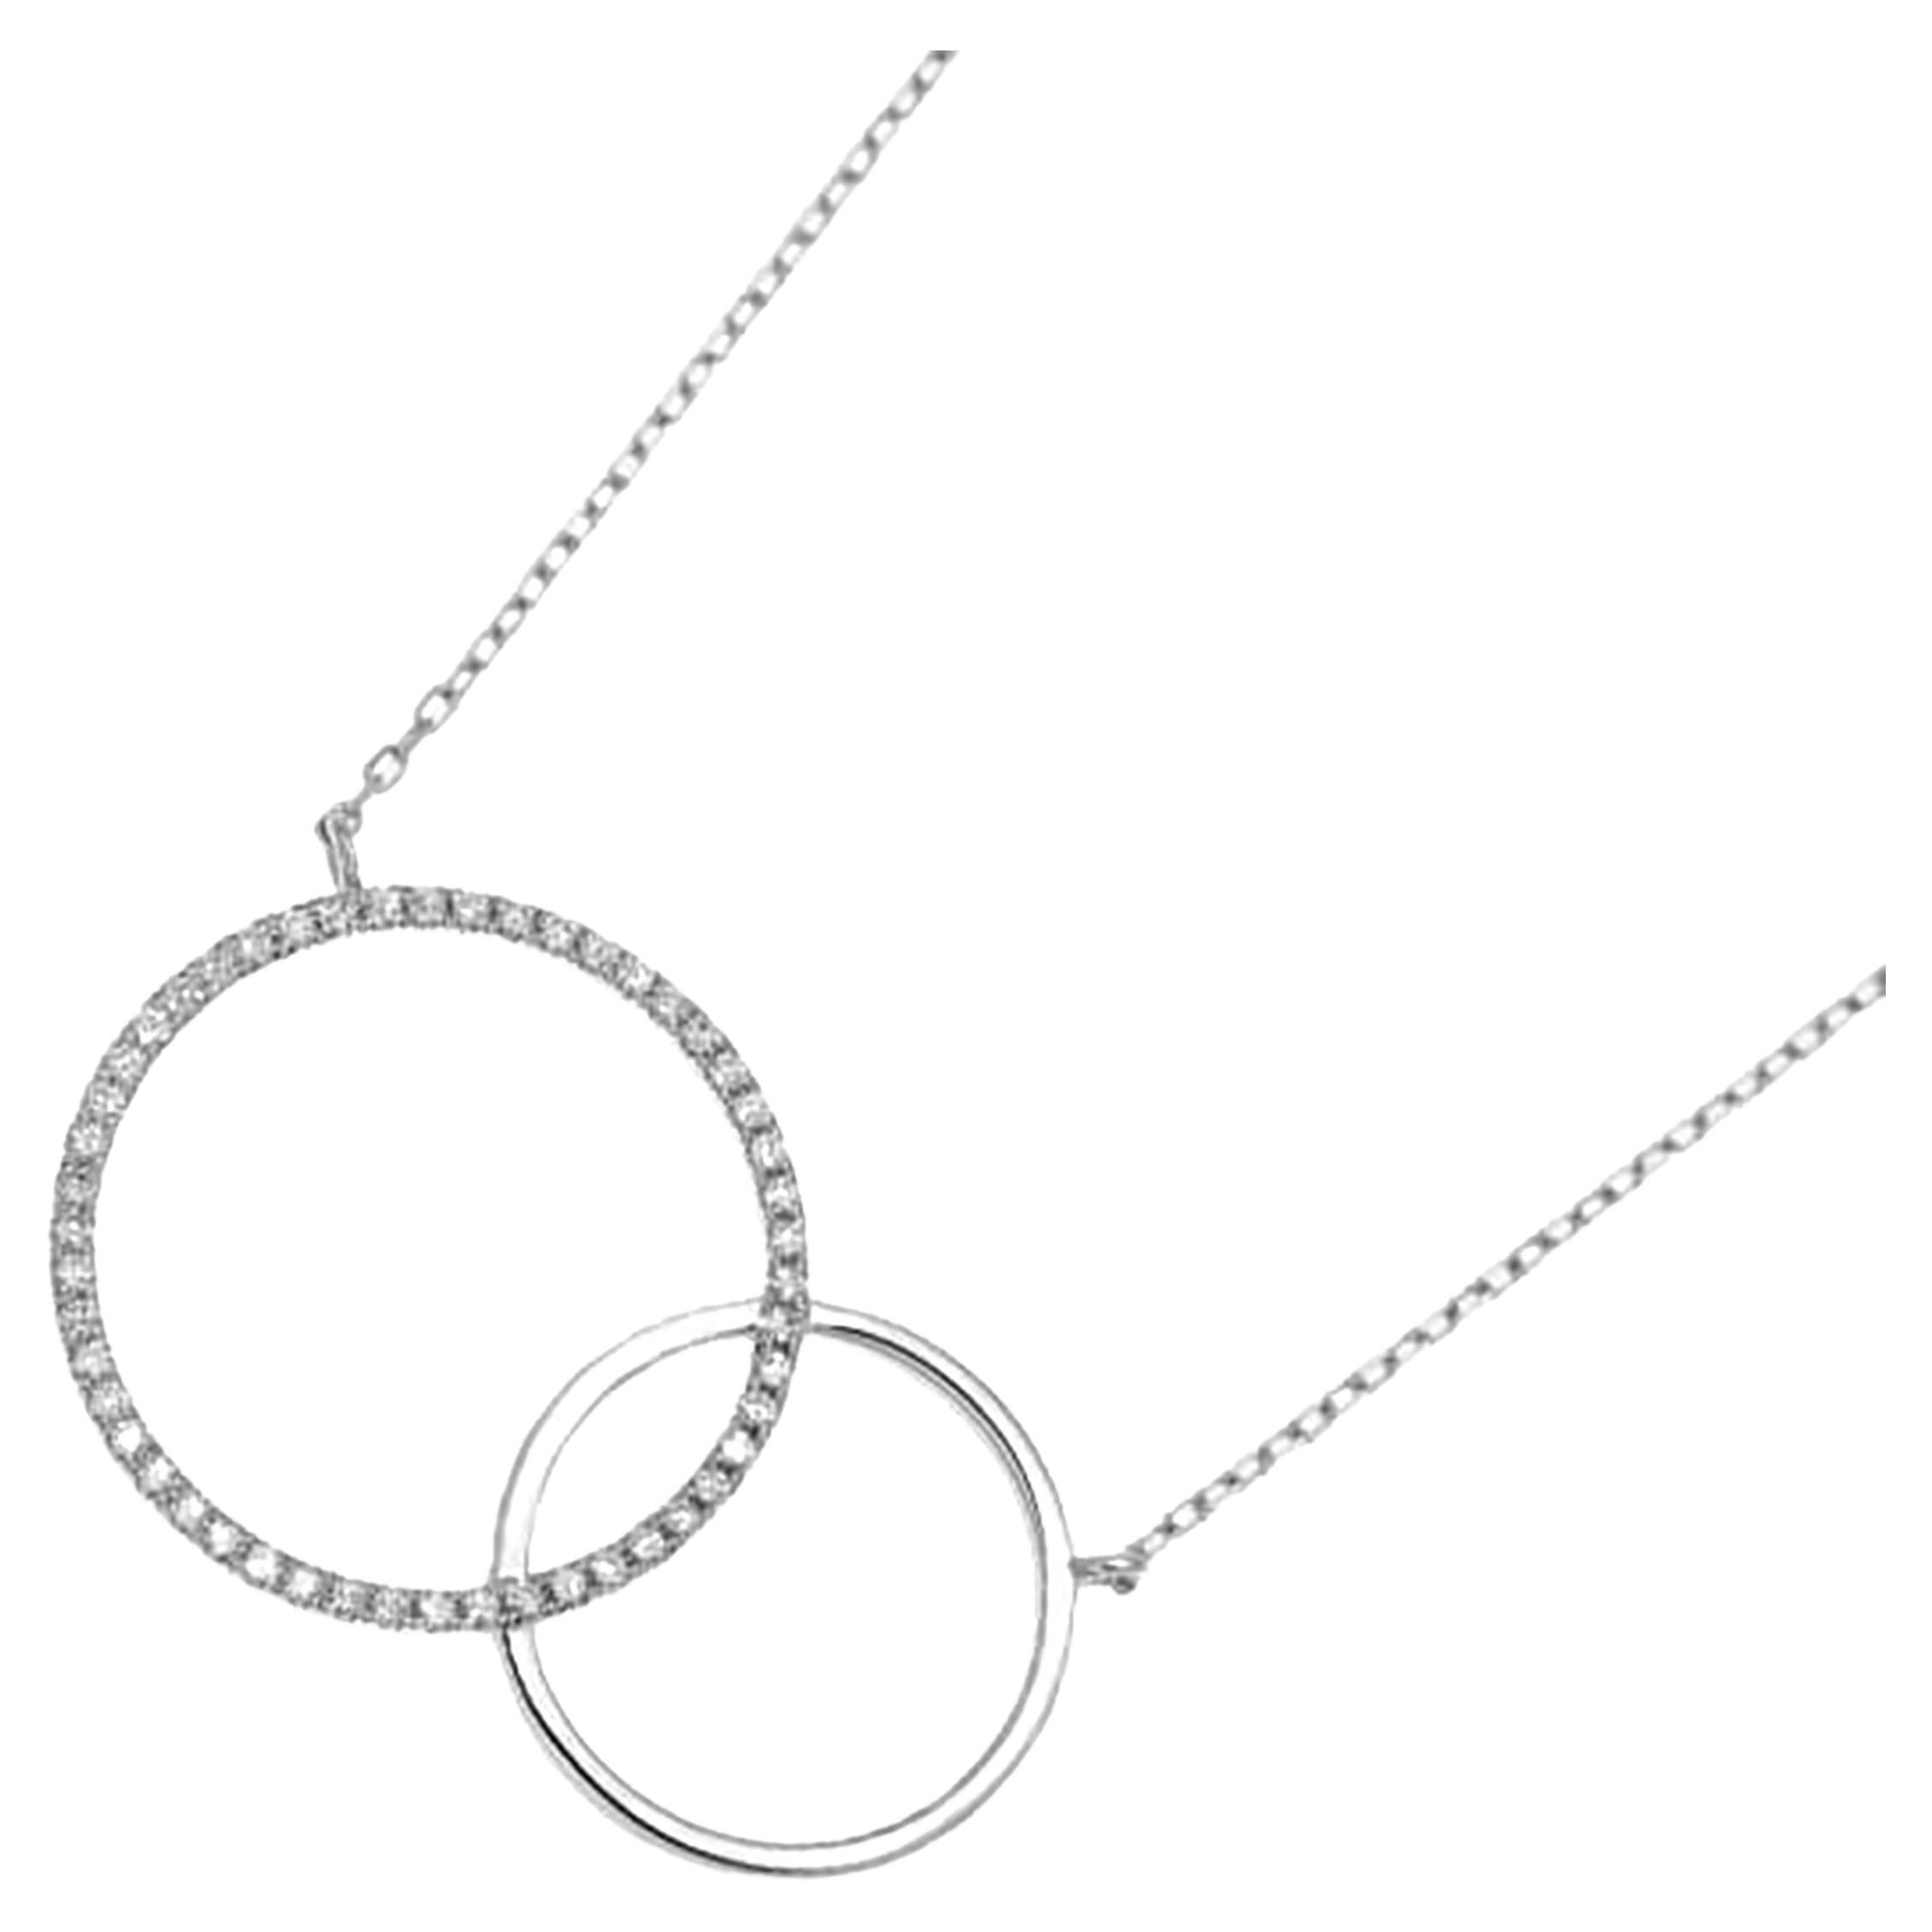 18K White Gold Diamond Circle Pendant Necklace  0.15ct  Approx. 17.5mm x 27.2m